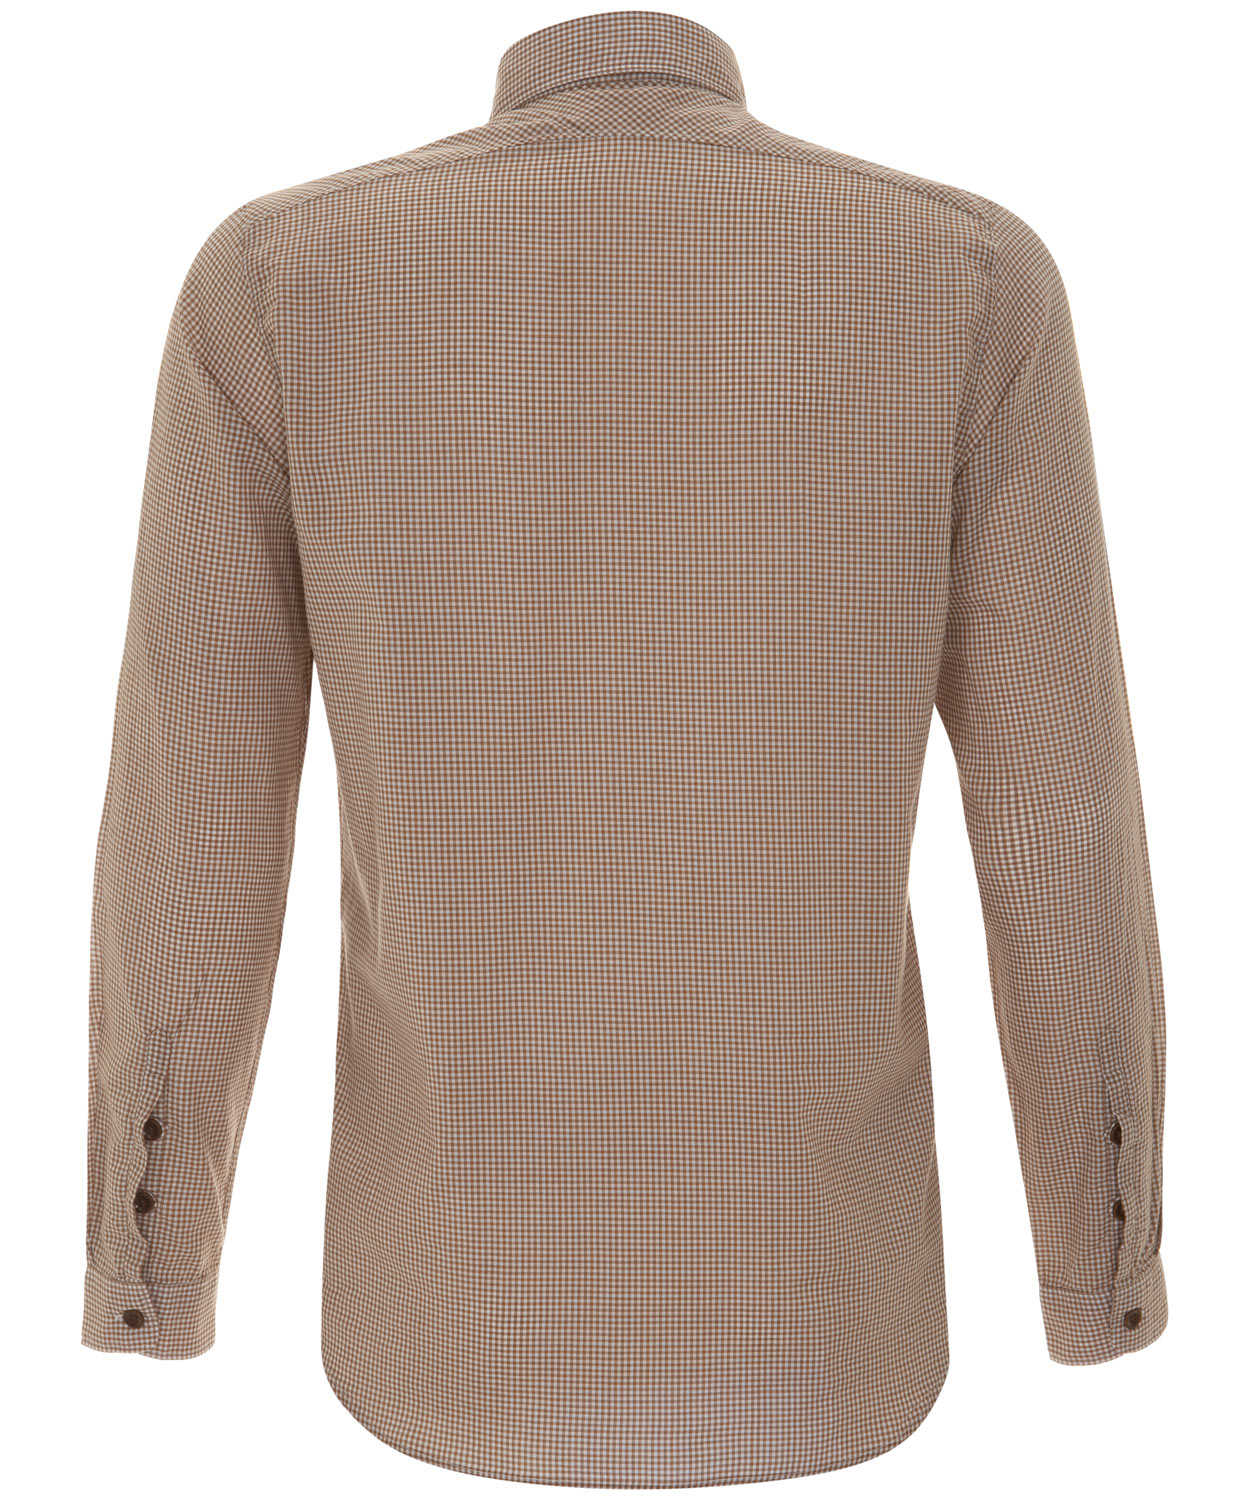 Lyst - Folk Brown Gingham Two Pocket Shirt in Brown for Men